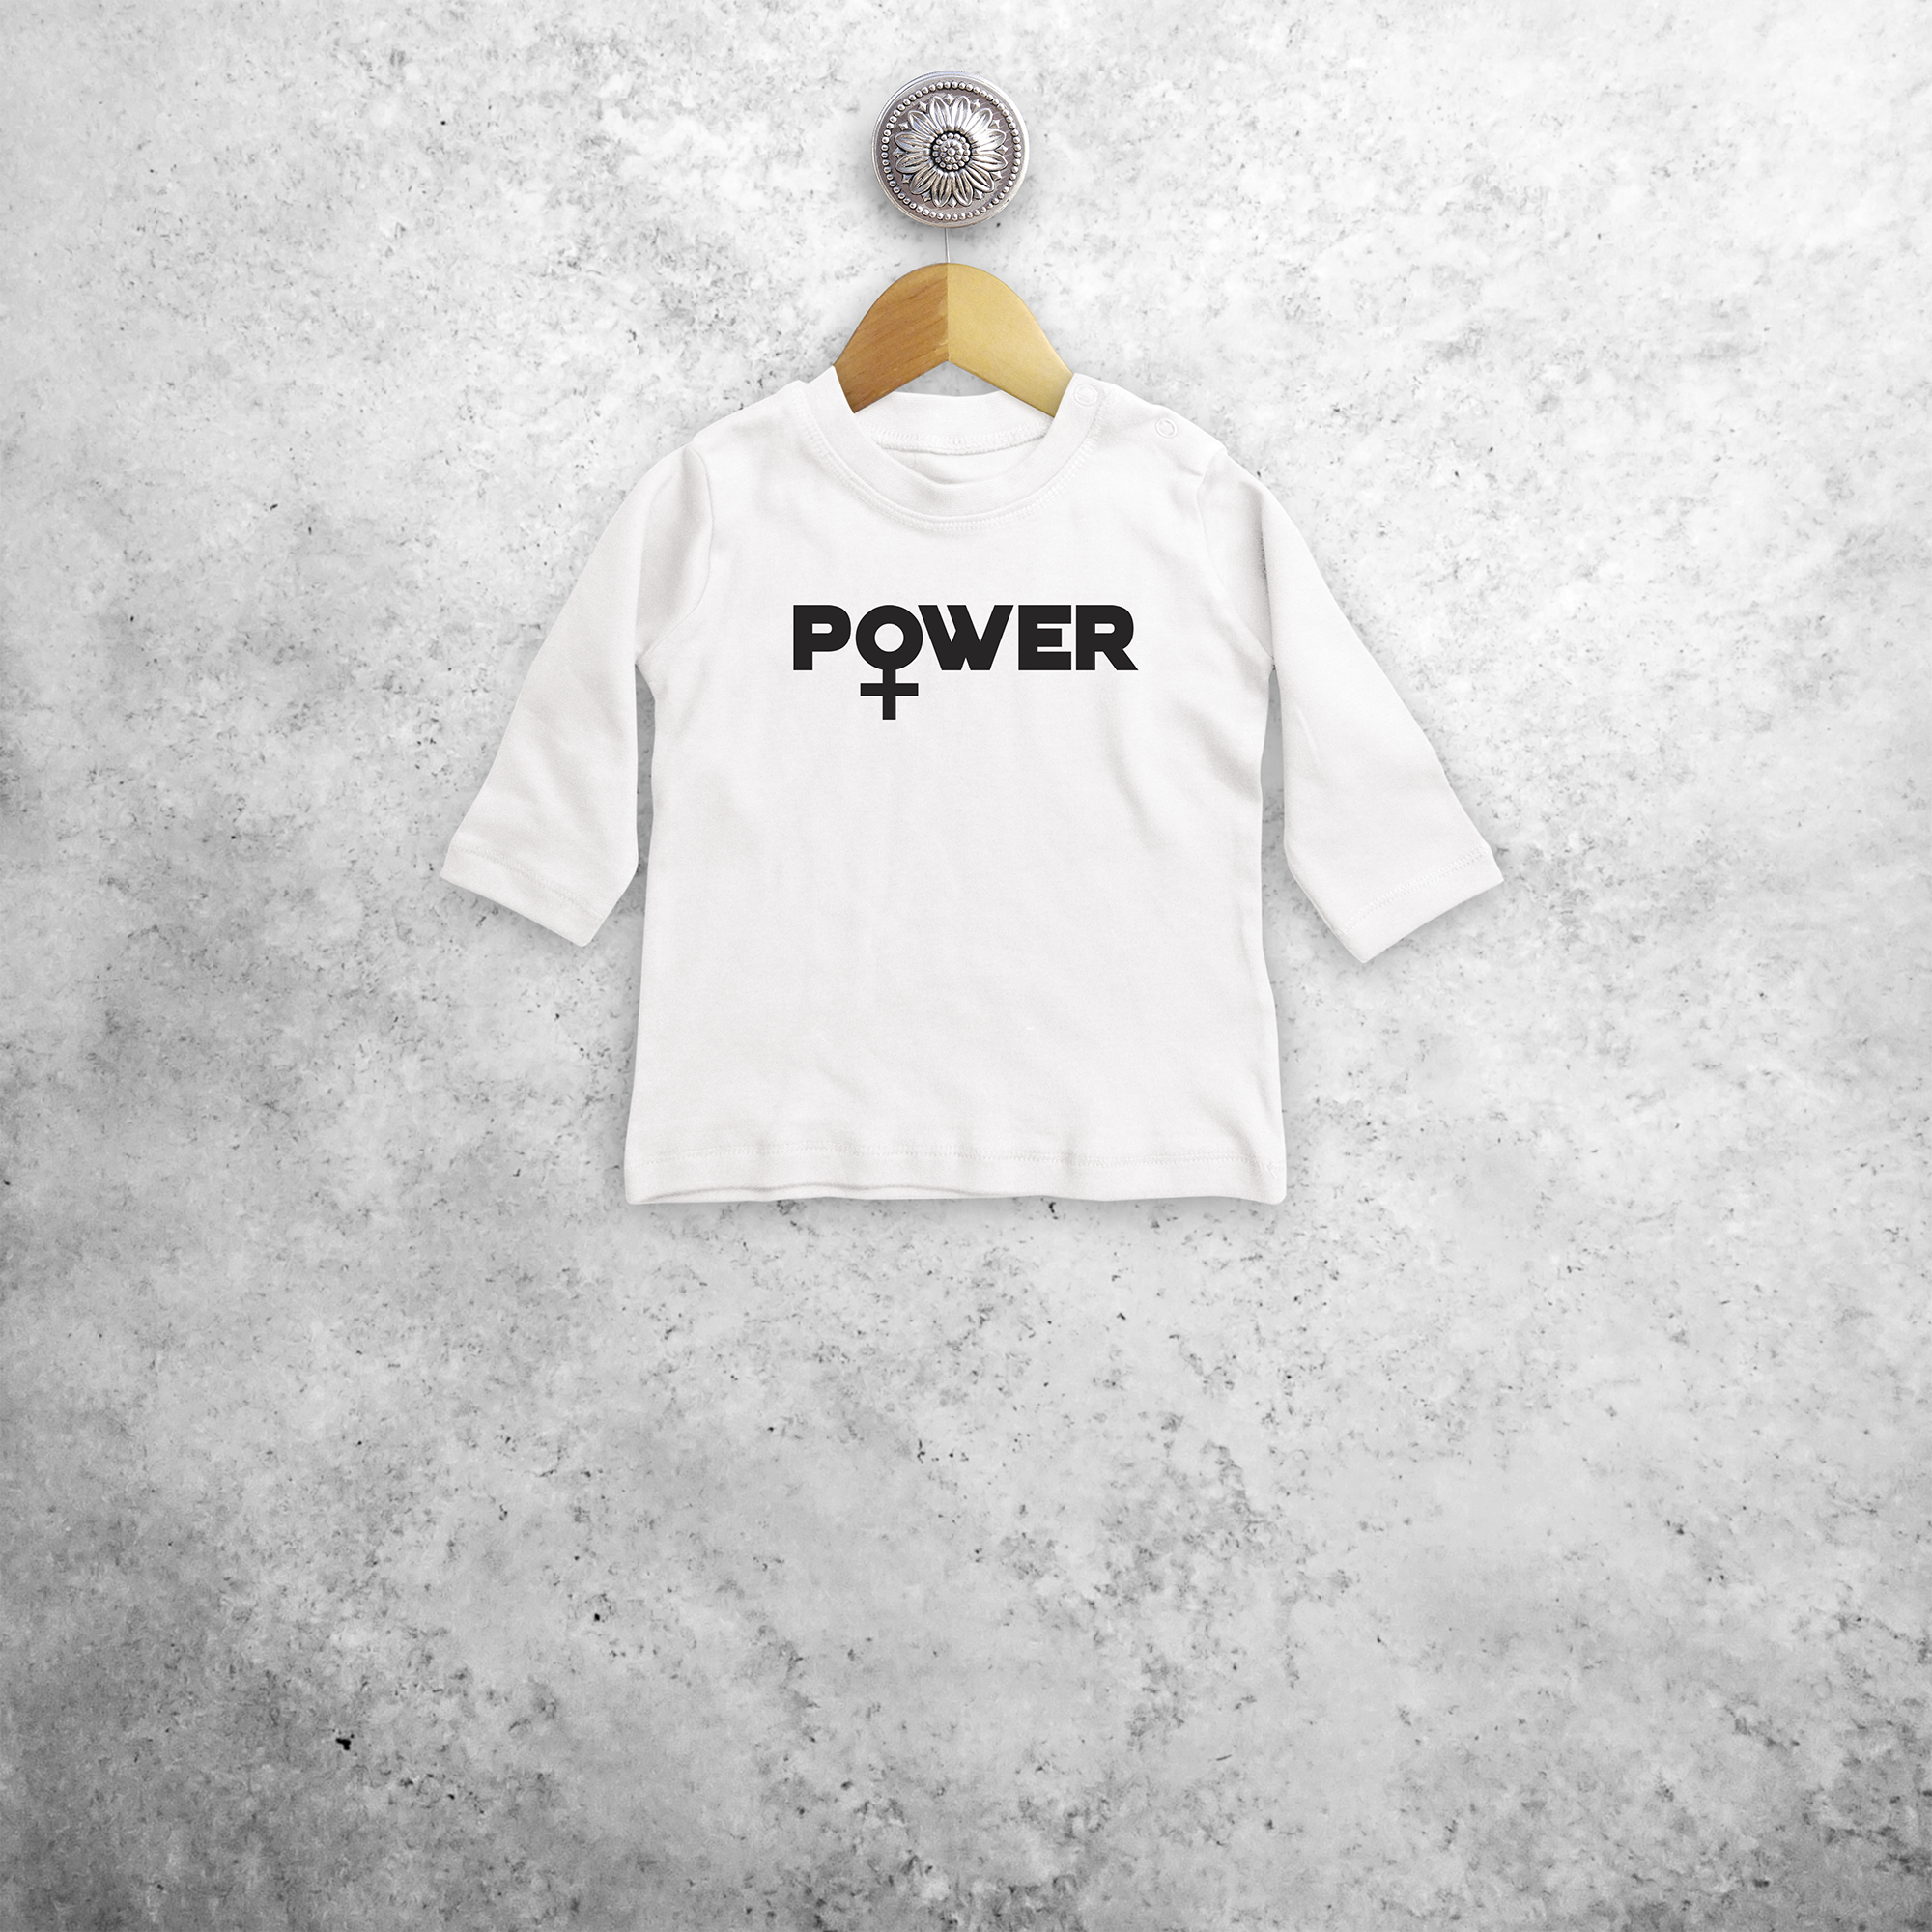 'Power' baby longsleeve shirt